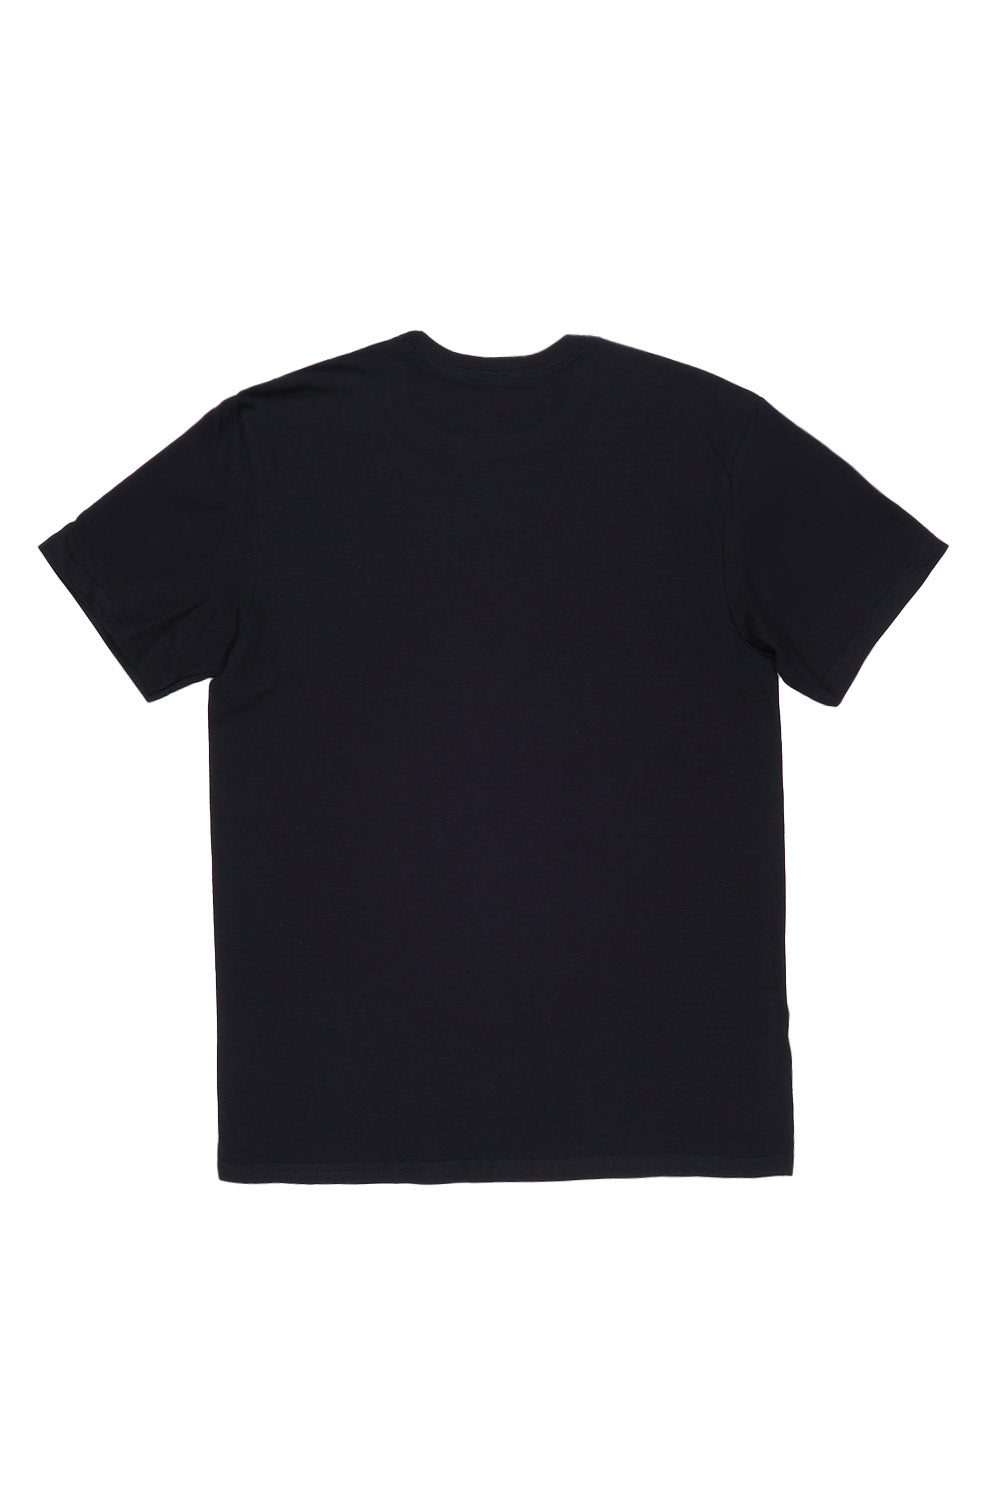 Manhattan T-Shirt in Black (Custom Packs)